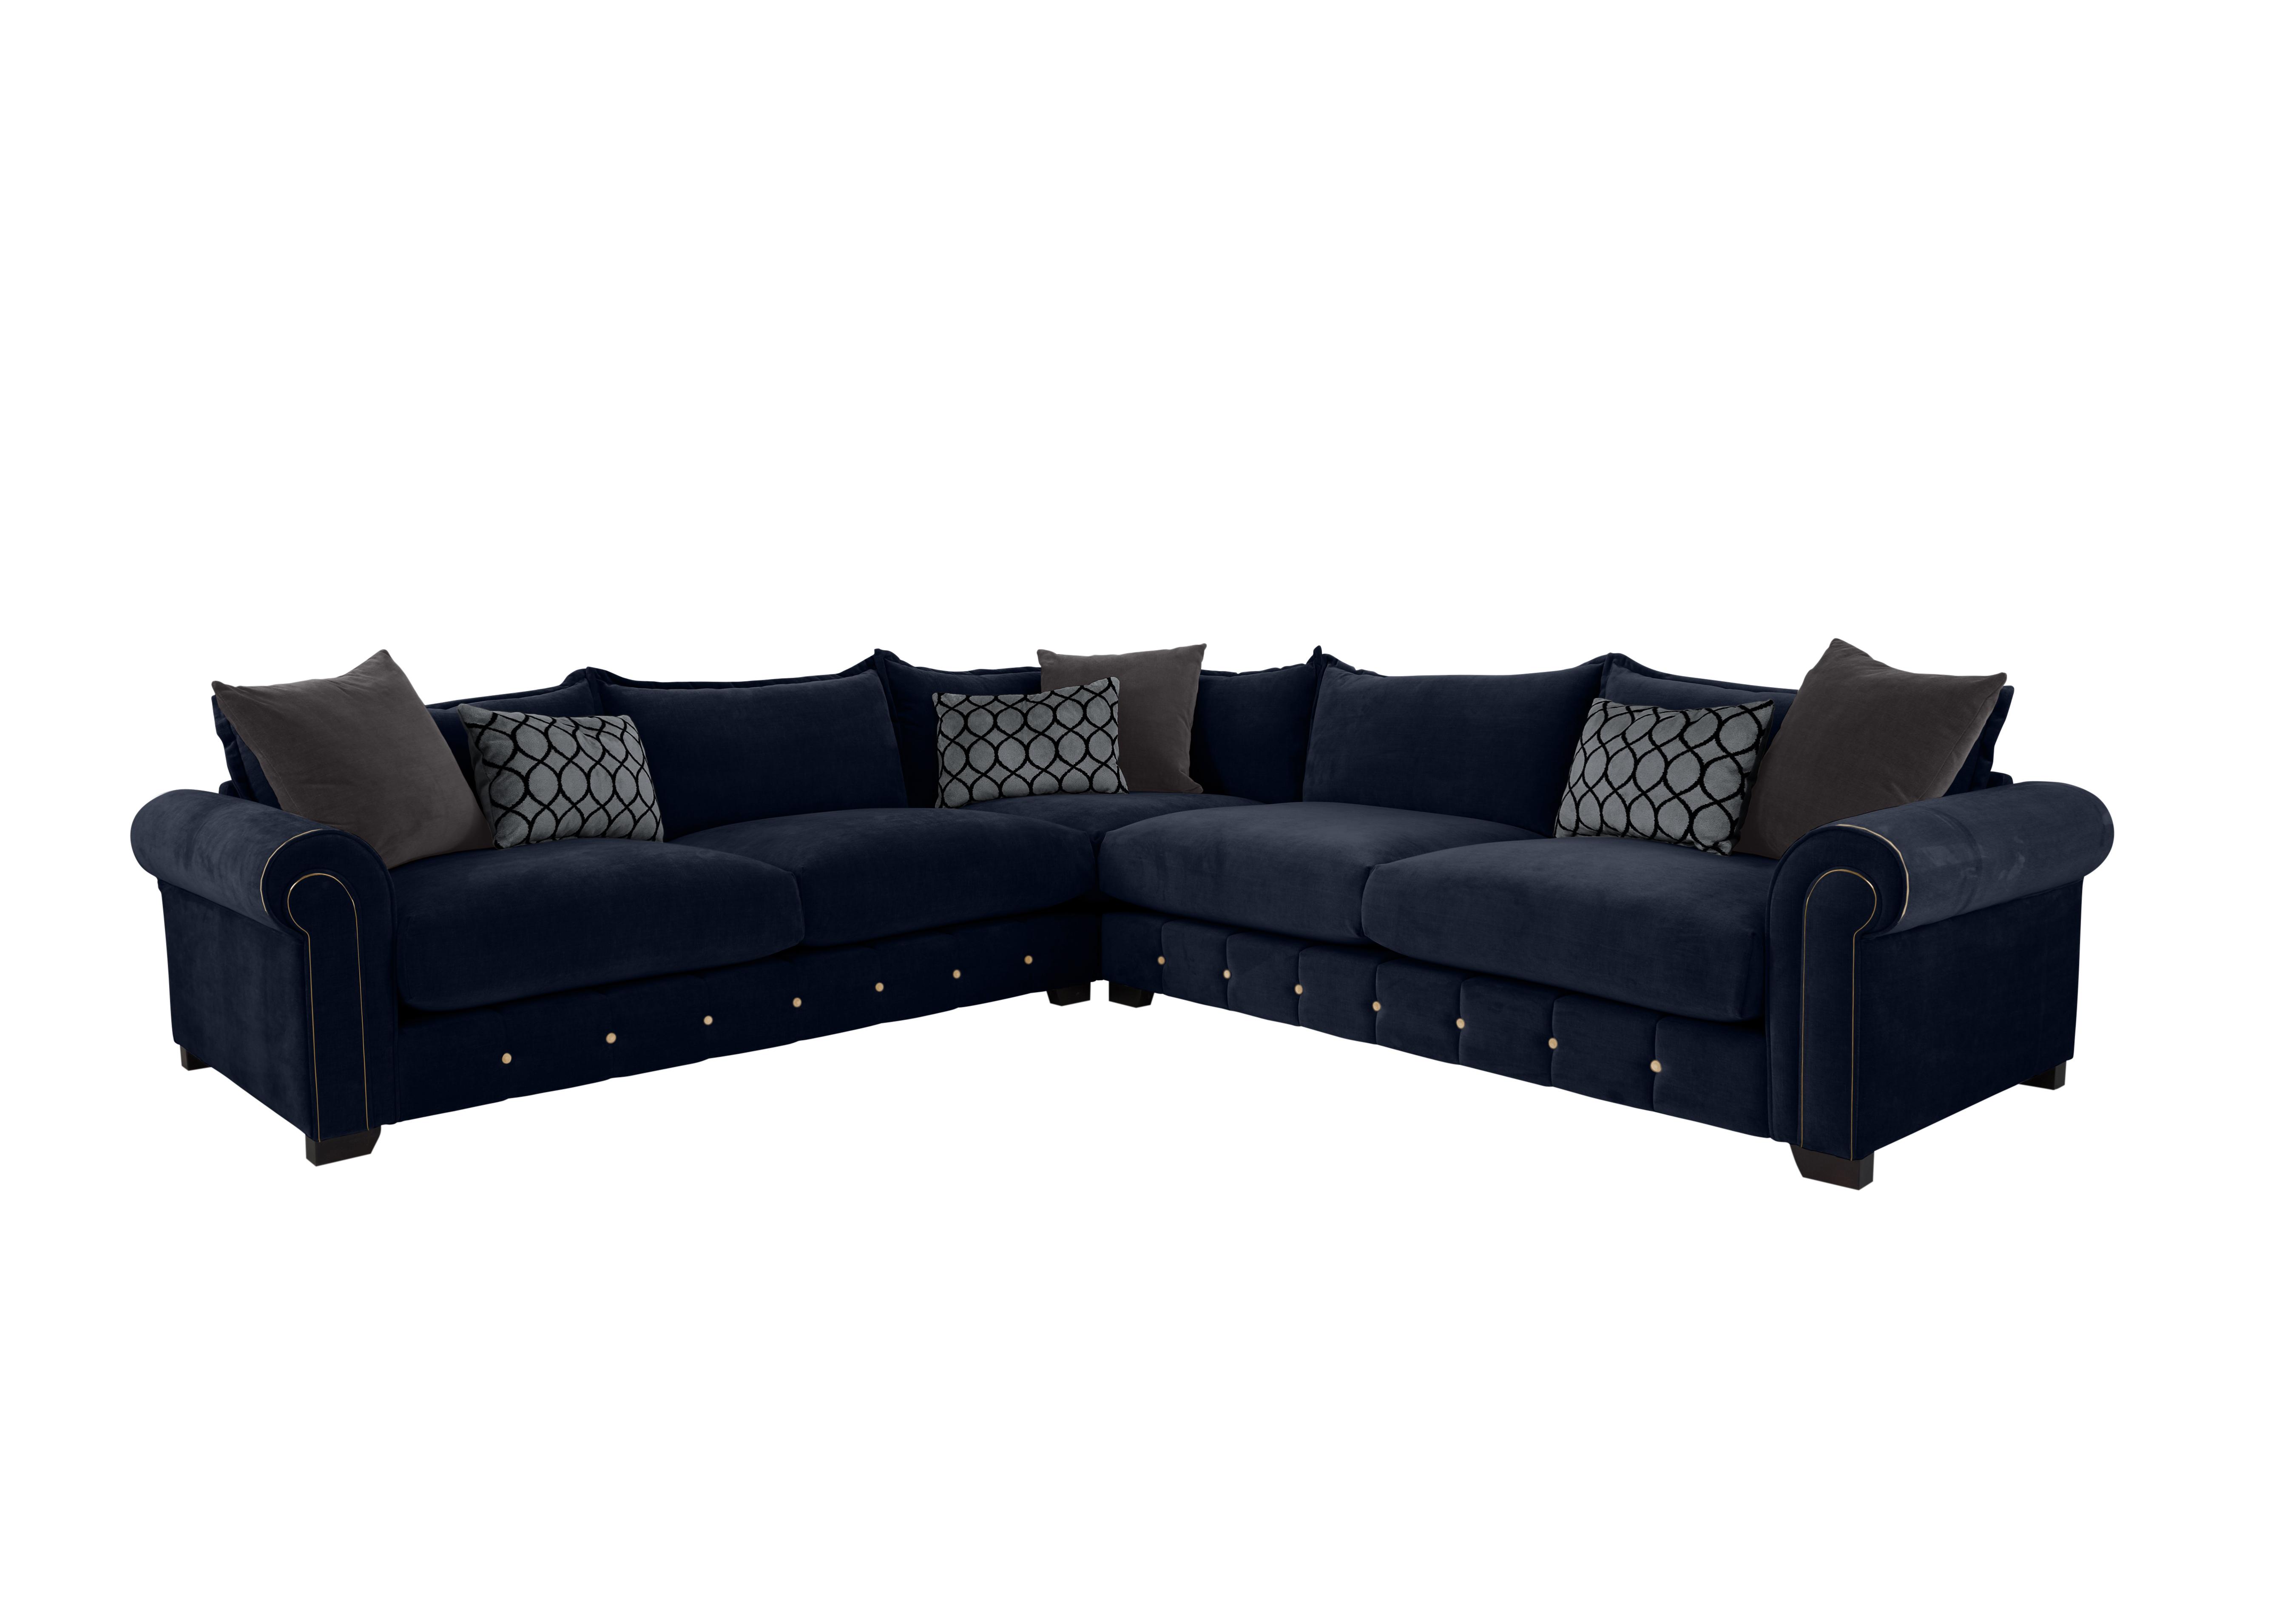 Sumptuous Large Fabric Corner Sofa in Chamonix Navy Dk/Gold on Furniture Village